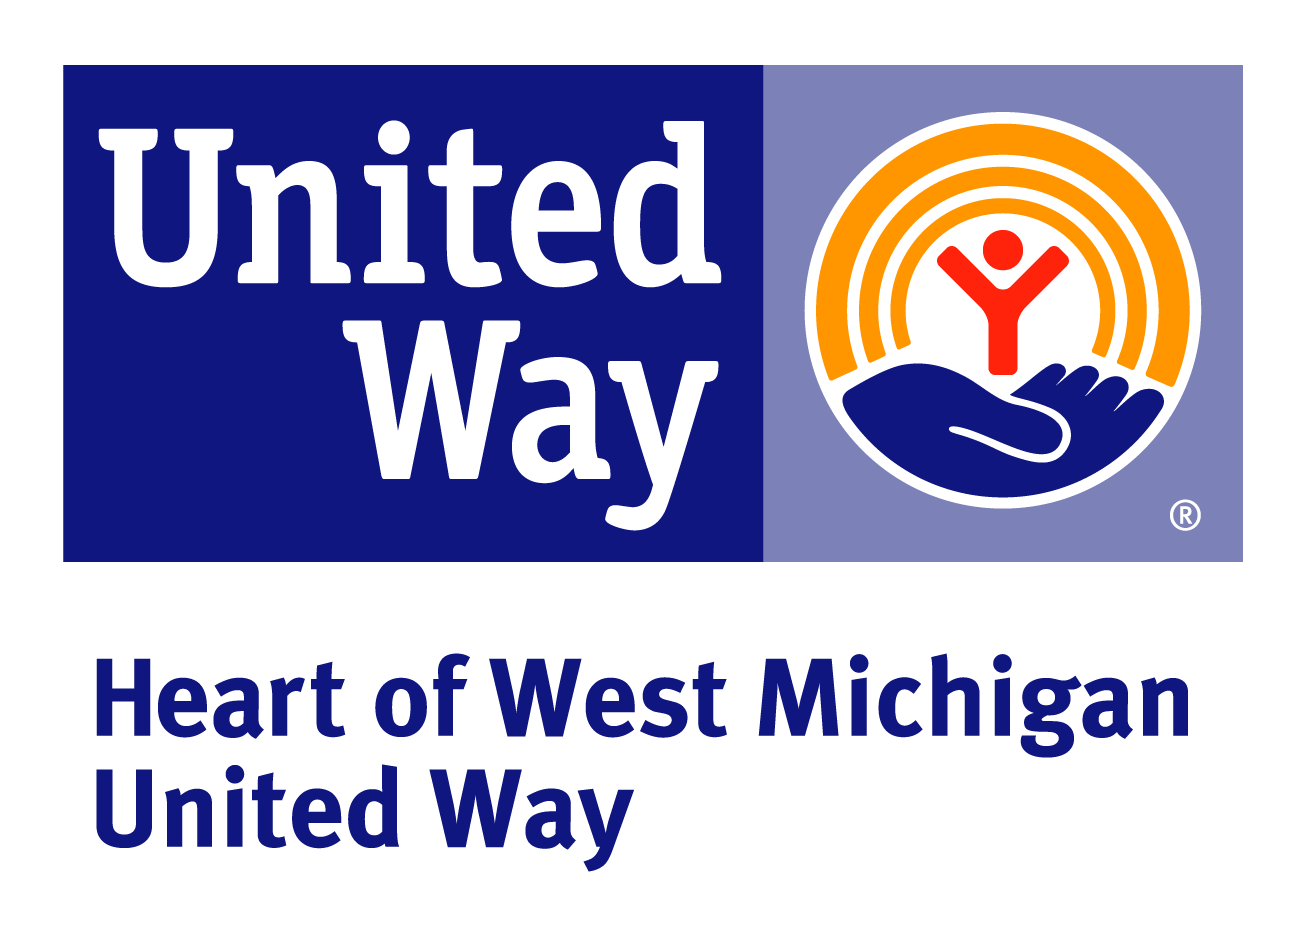 United Way, Heart of West Michigan